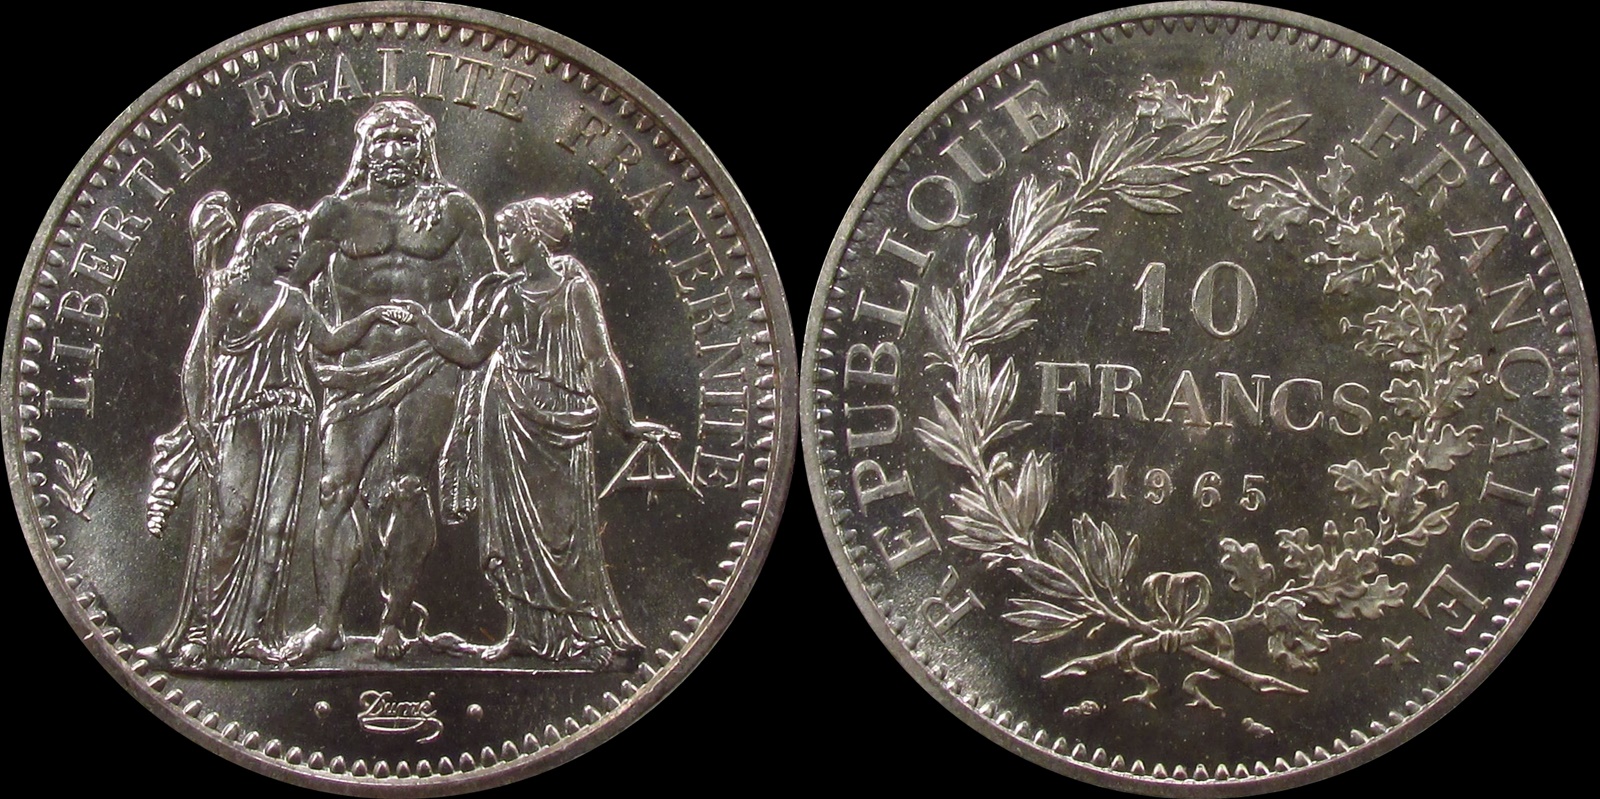 France 1965 10 Francs.jpg